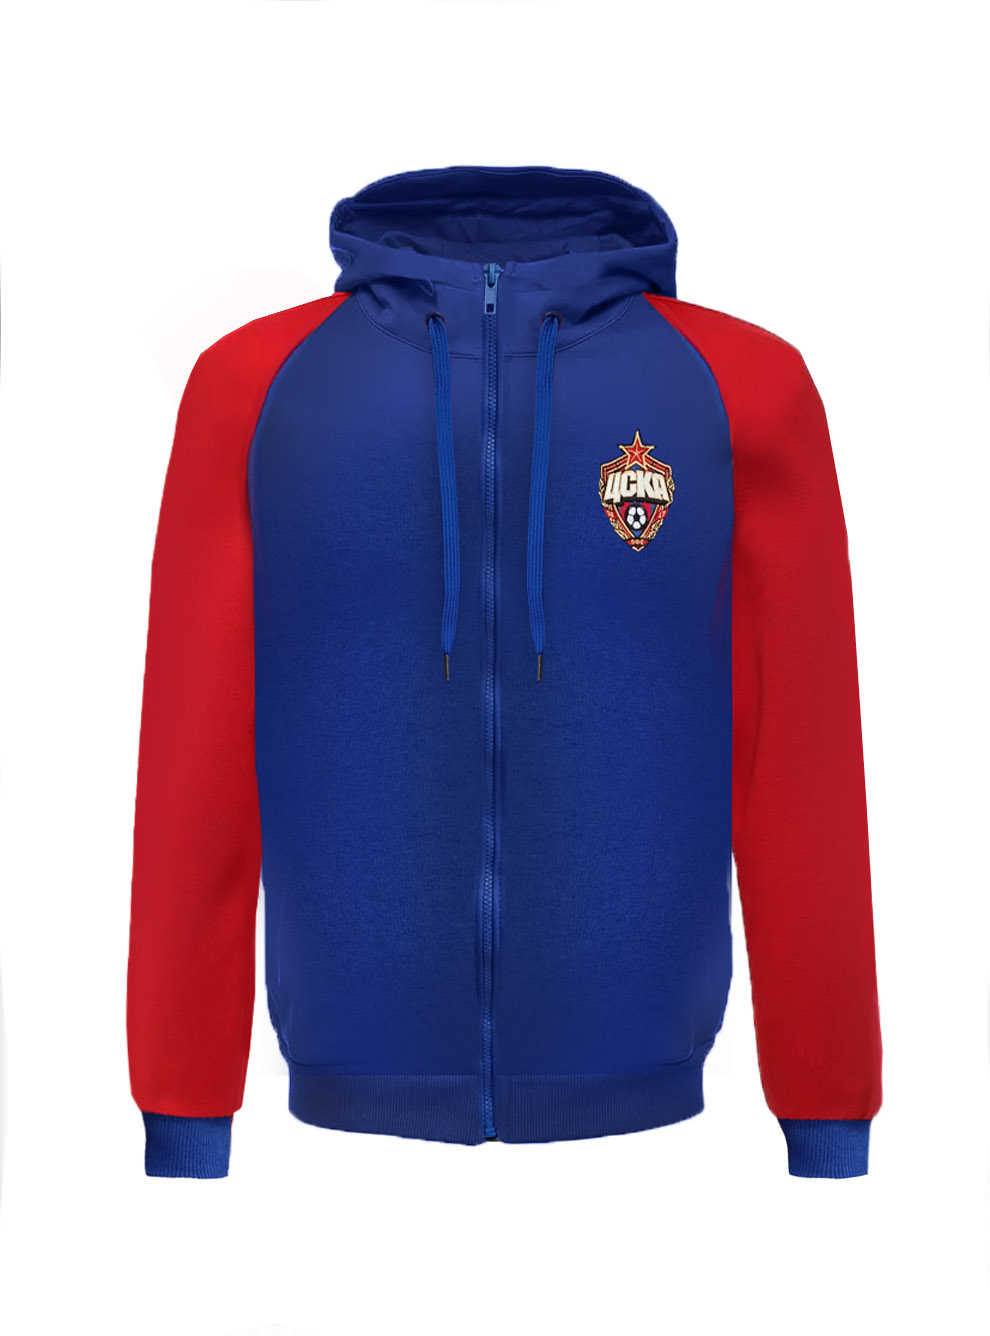 Толстовка на молнии «PFC CSKA MOSCOW est.1911» красно-синяя (L)